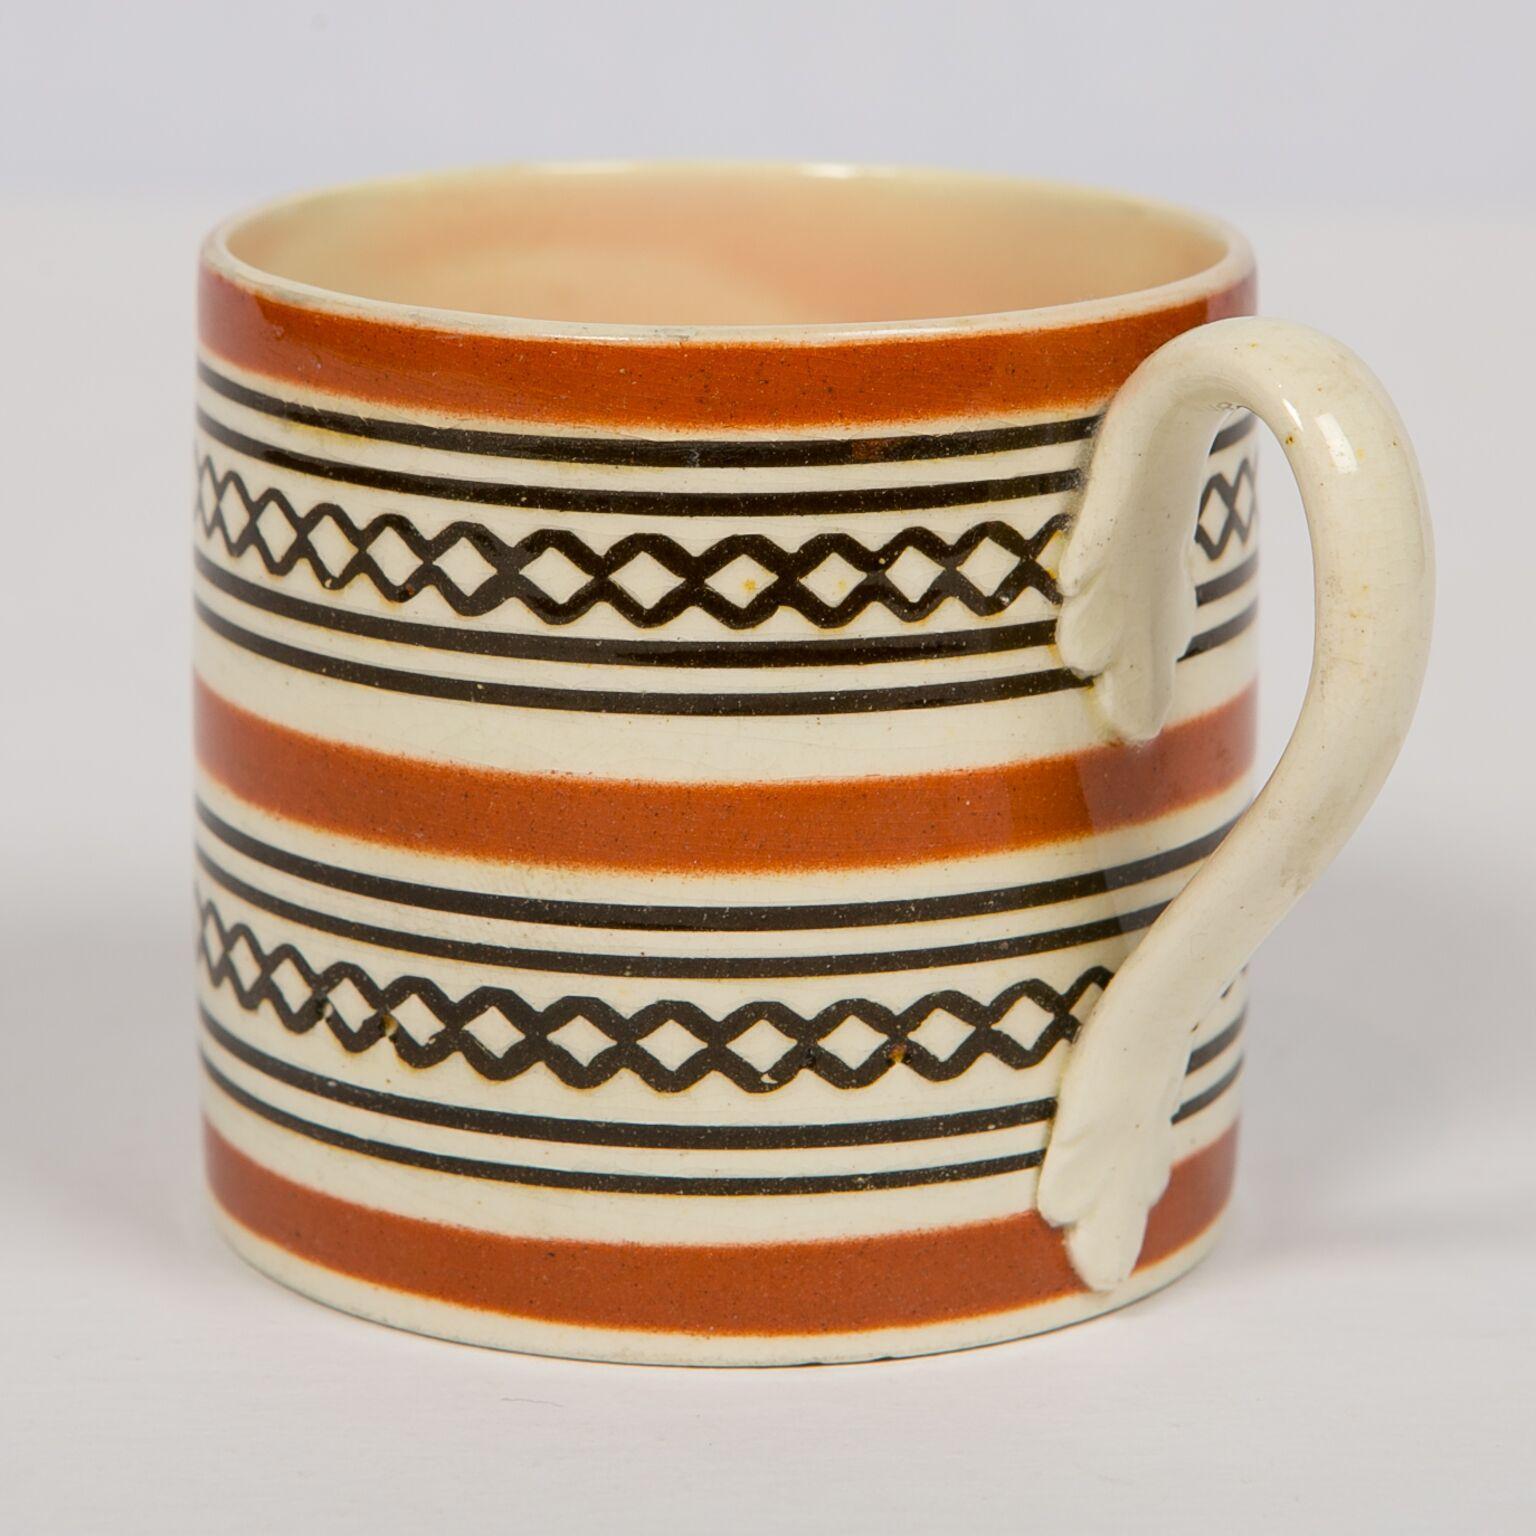 19th Century Small Brown Mochaware Mug Made in England, circa 1820